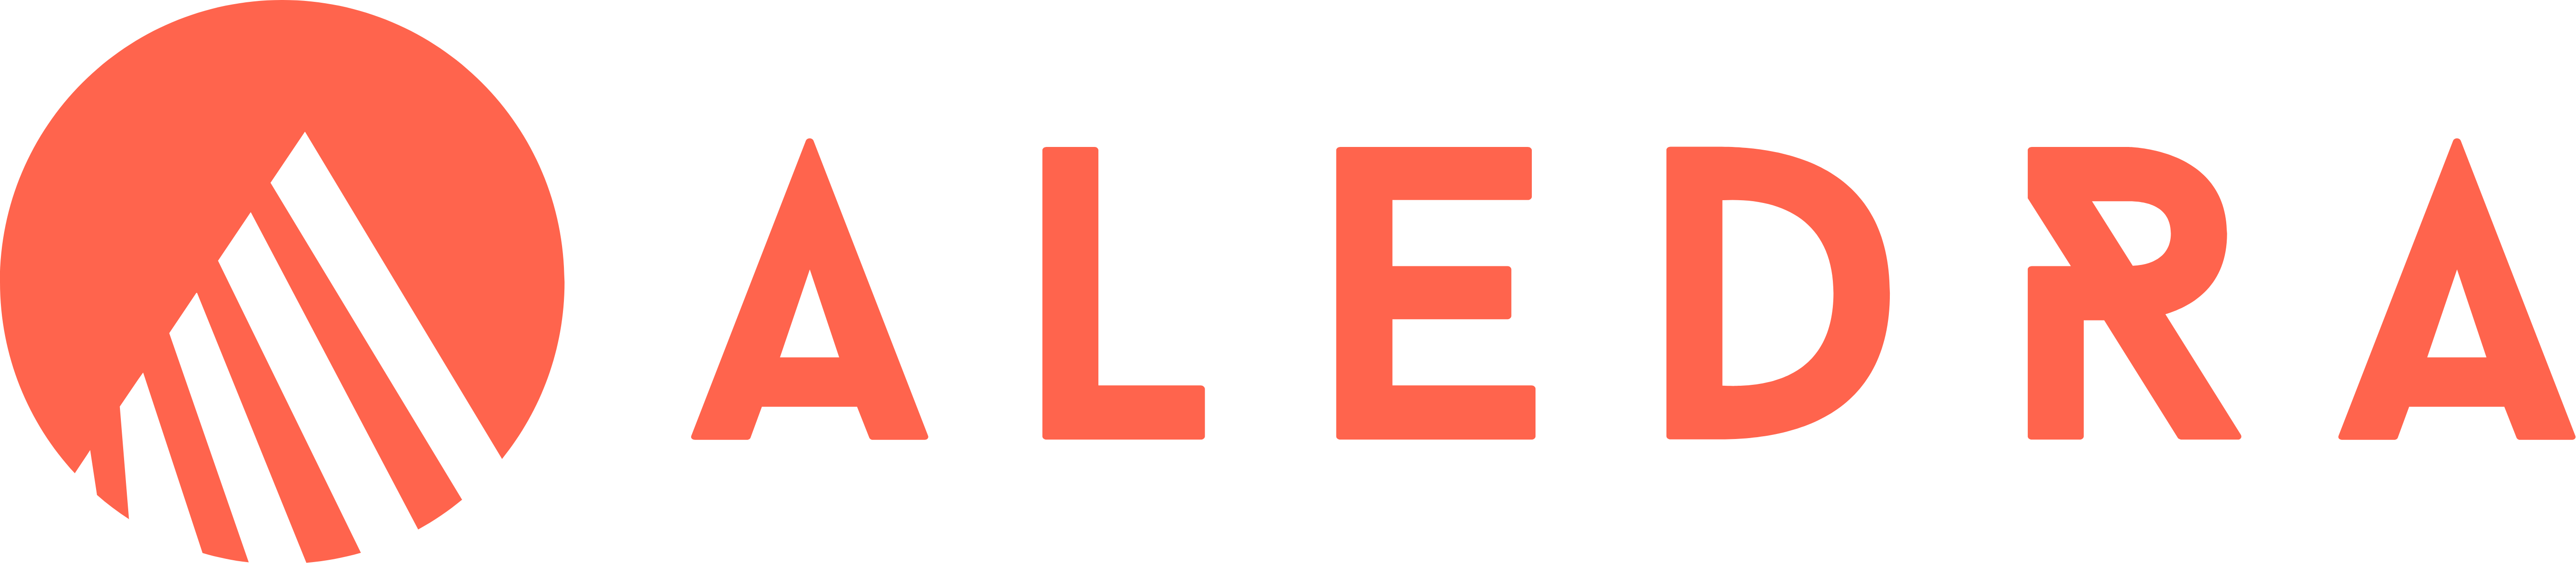 Aledra-Legal-logo